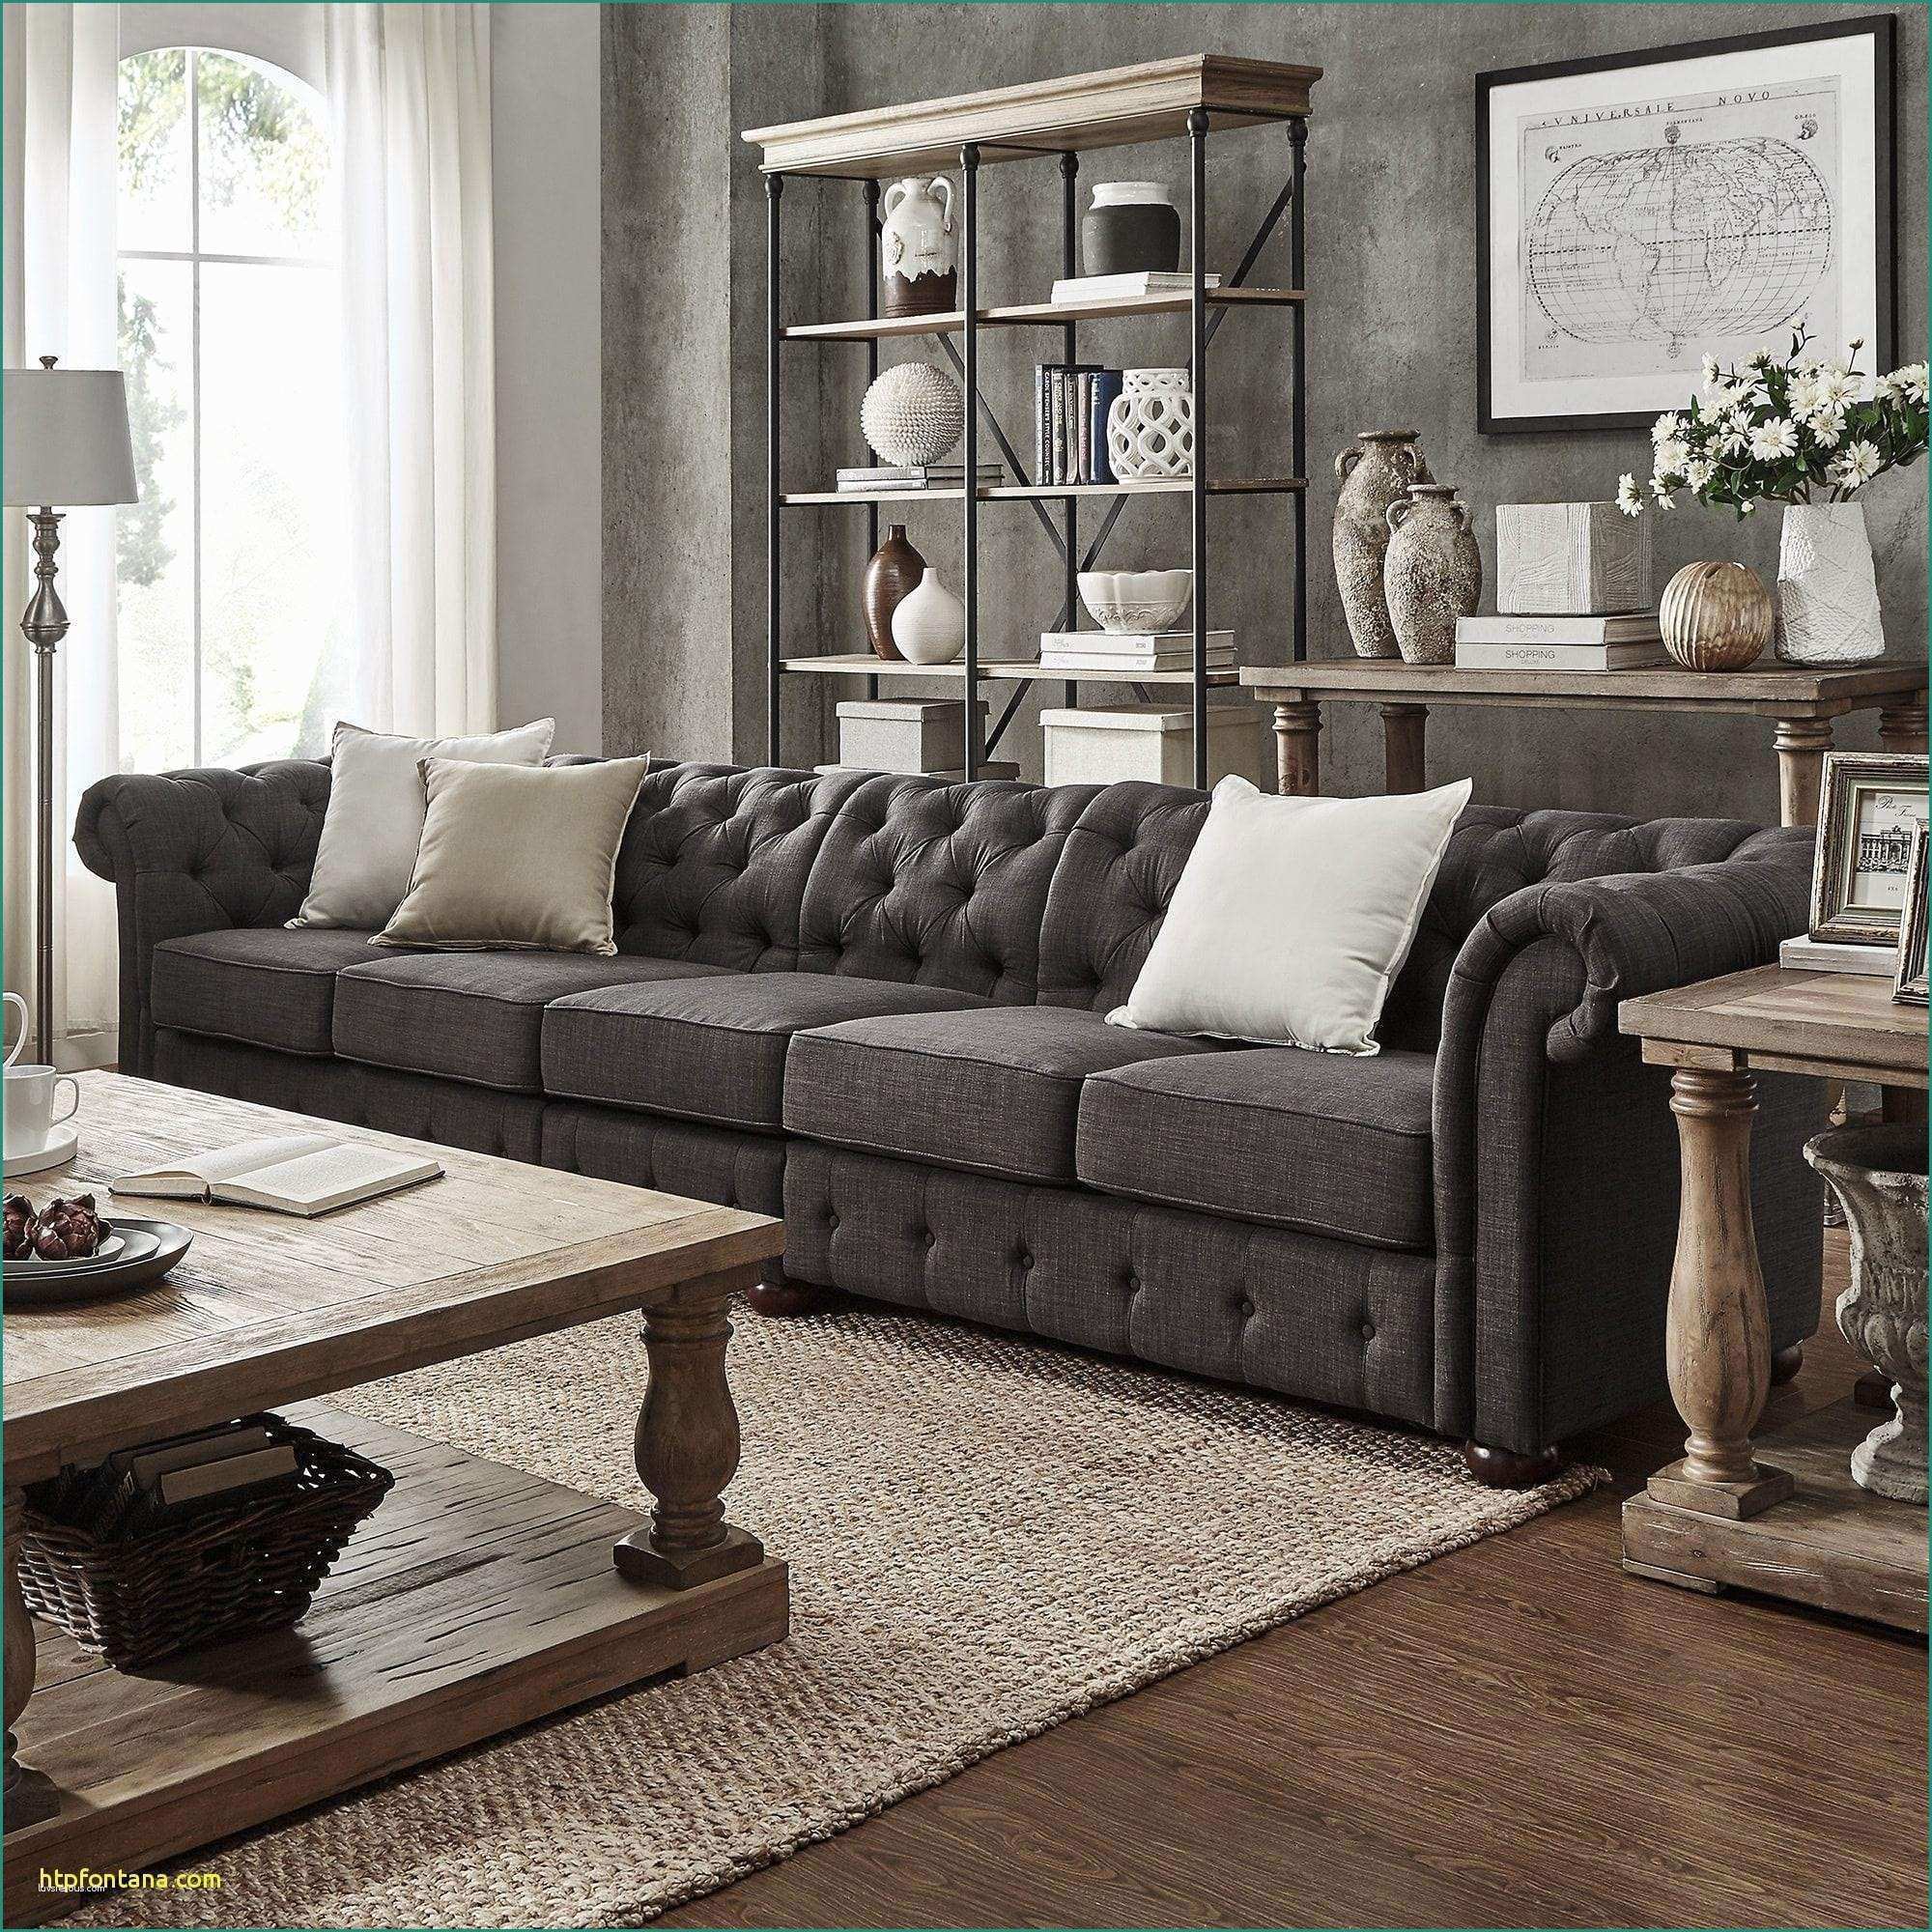 Vasi Da Interno Design E 31 Inspirational Living Room Rustic Decor Pic Design Ideas